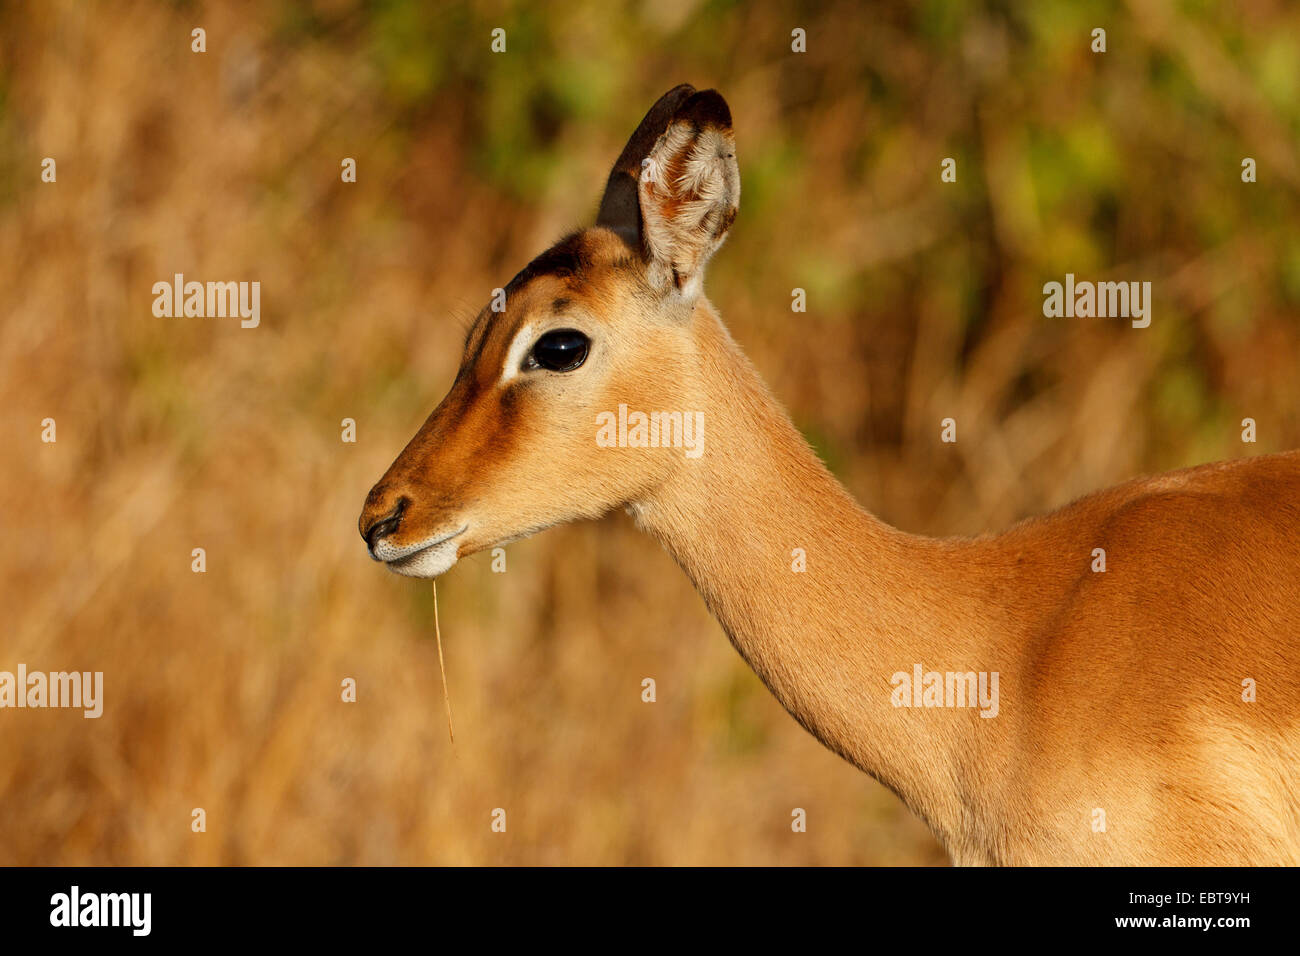 impala (Aepyceros melampus), female, portrait, South Africa, Krueger National Park Stock Photo